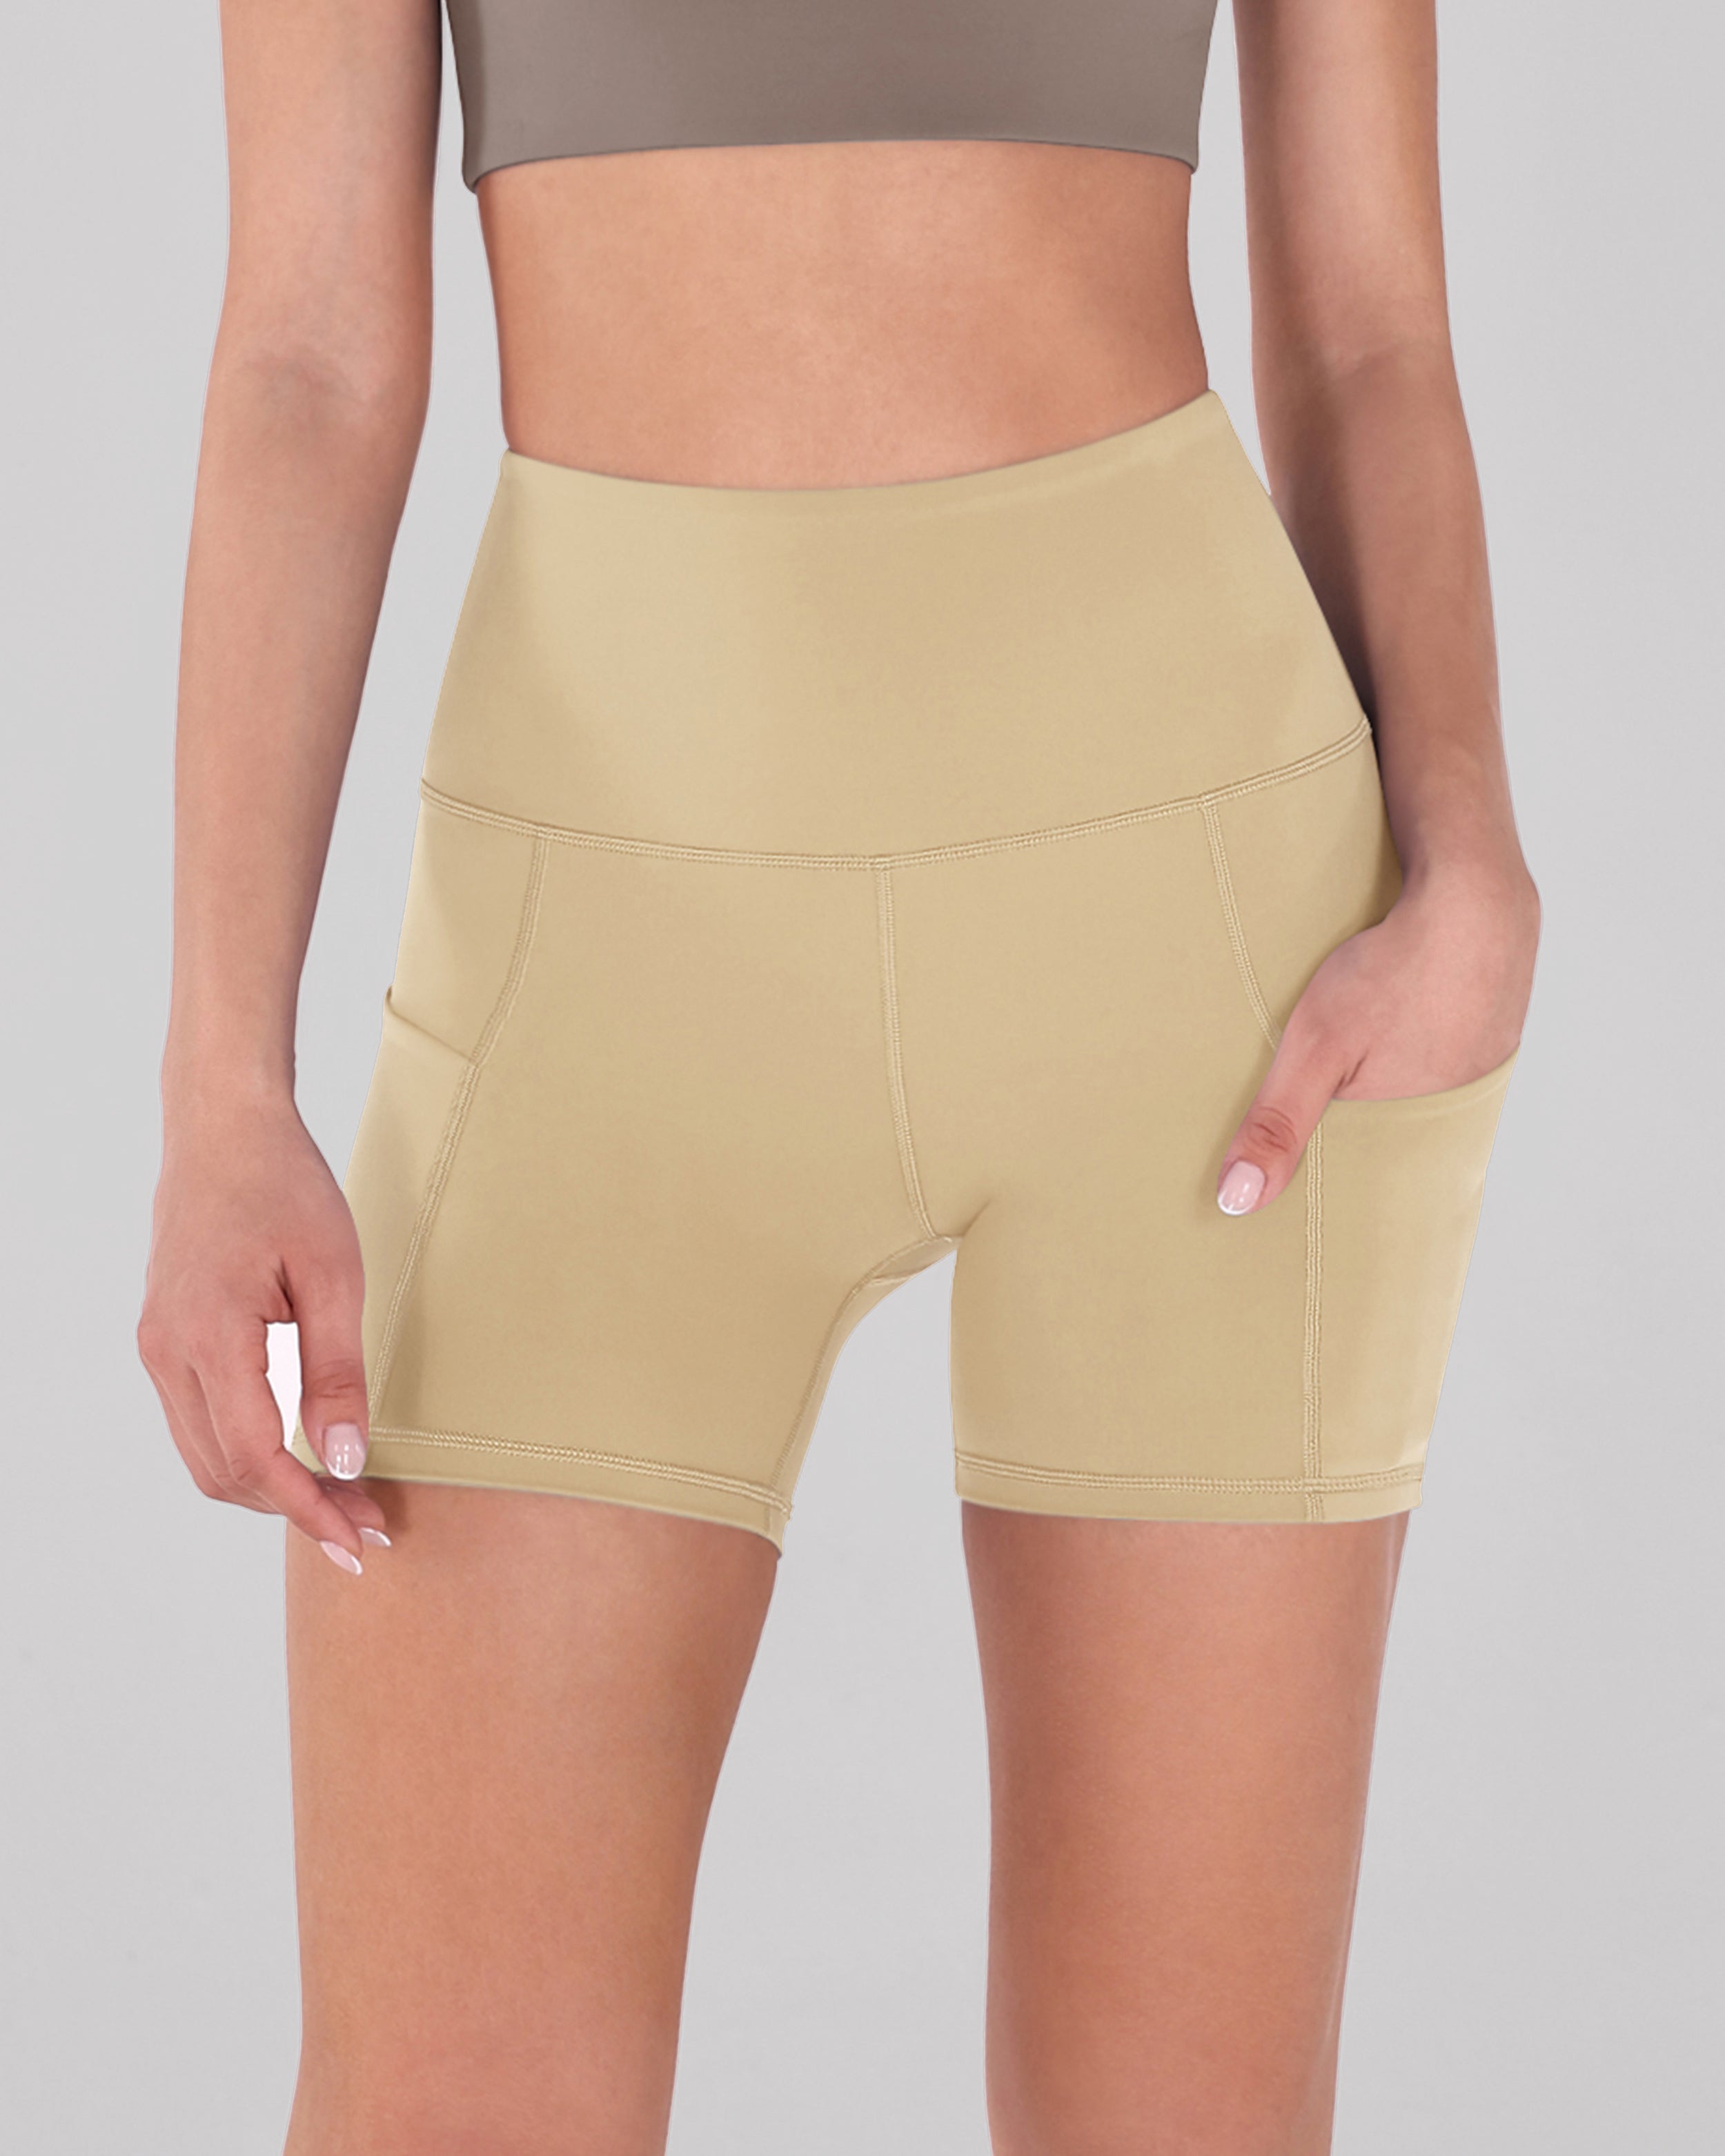 5" High Waist Tummy Control Shorts with Pockets Beige - ododos